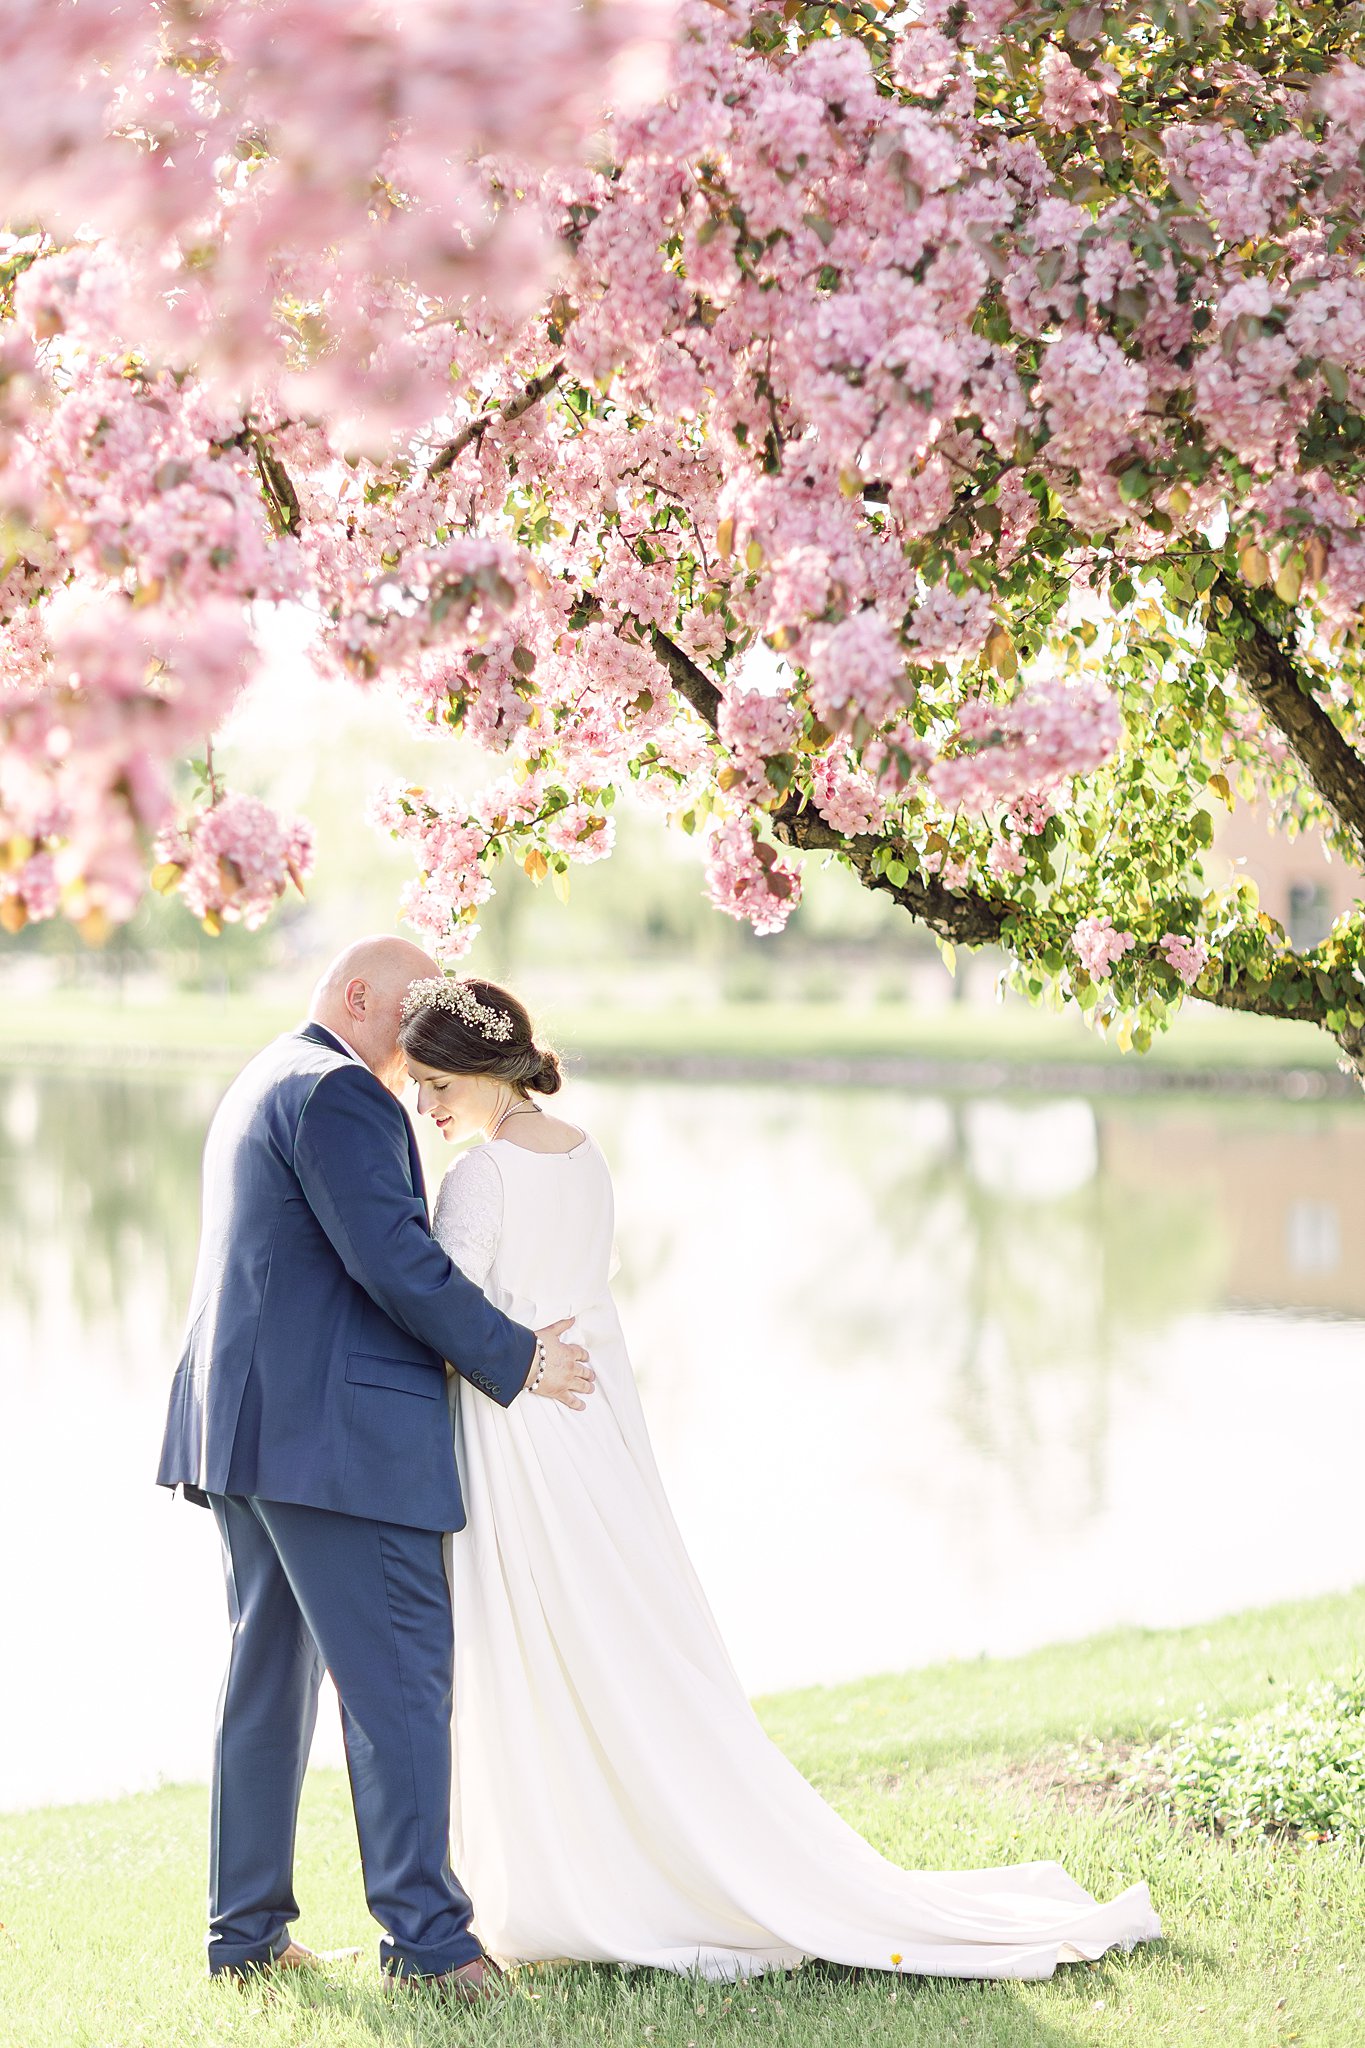 Apple Blossom Season Spring Wedding Portrait by Abby Anderson Wedding Photographer Fargo ND